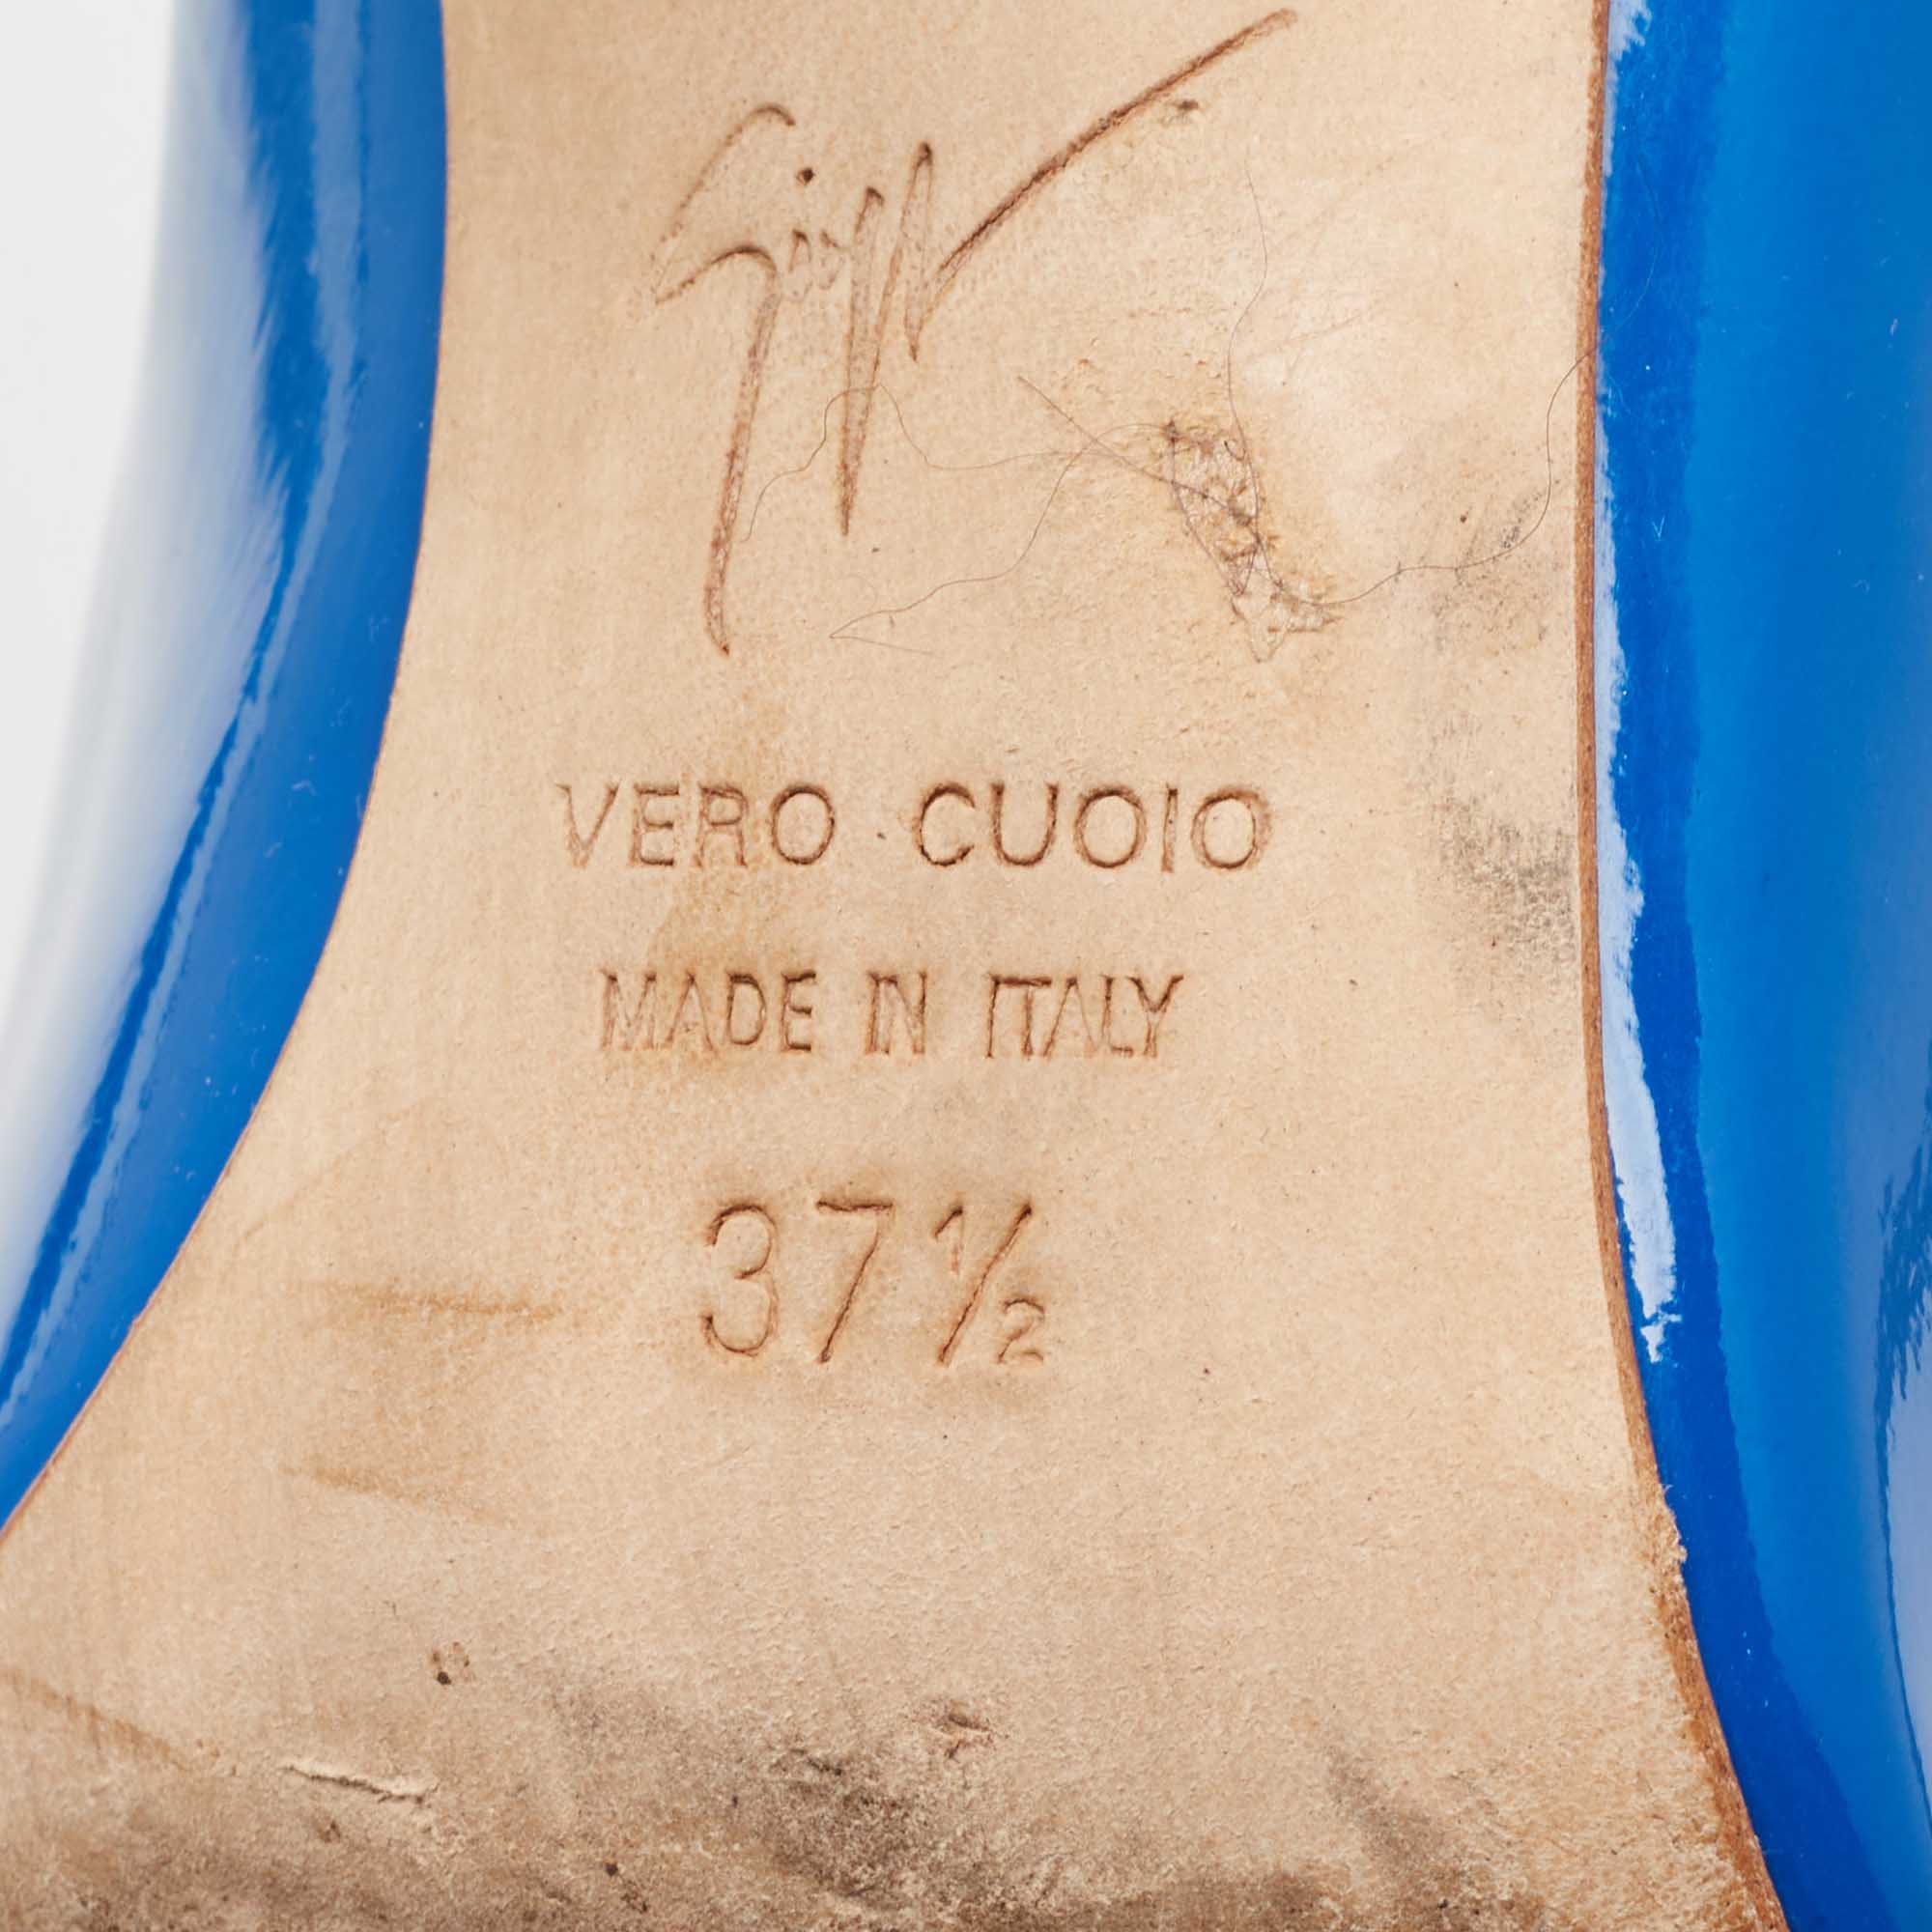 Giuseppe Zanotti Blue Patent Leather Pointed Toe Pumps Size 37.5